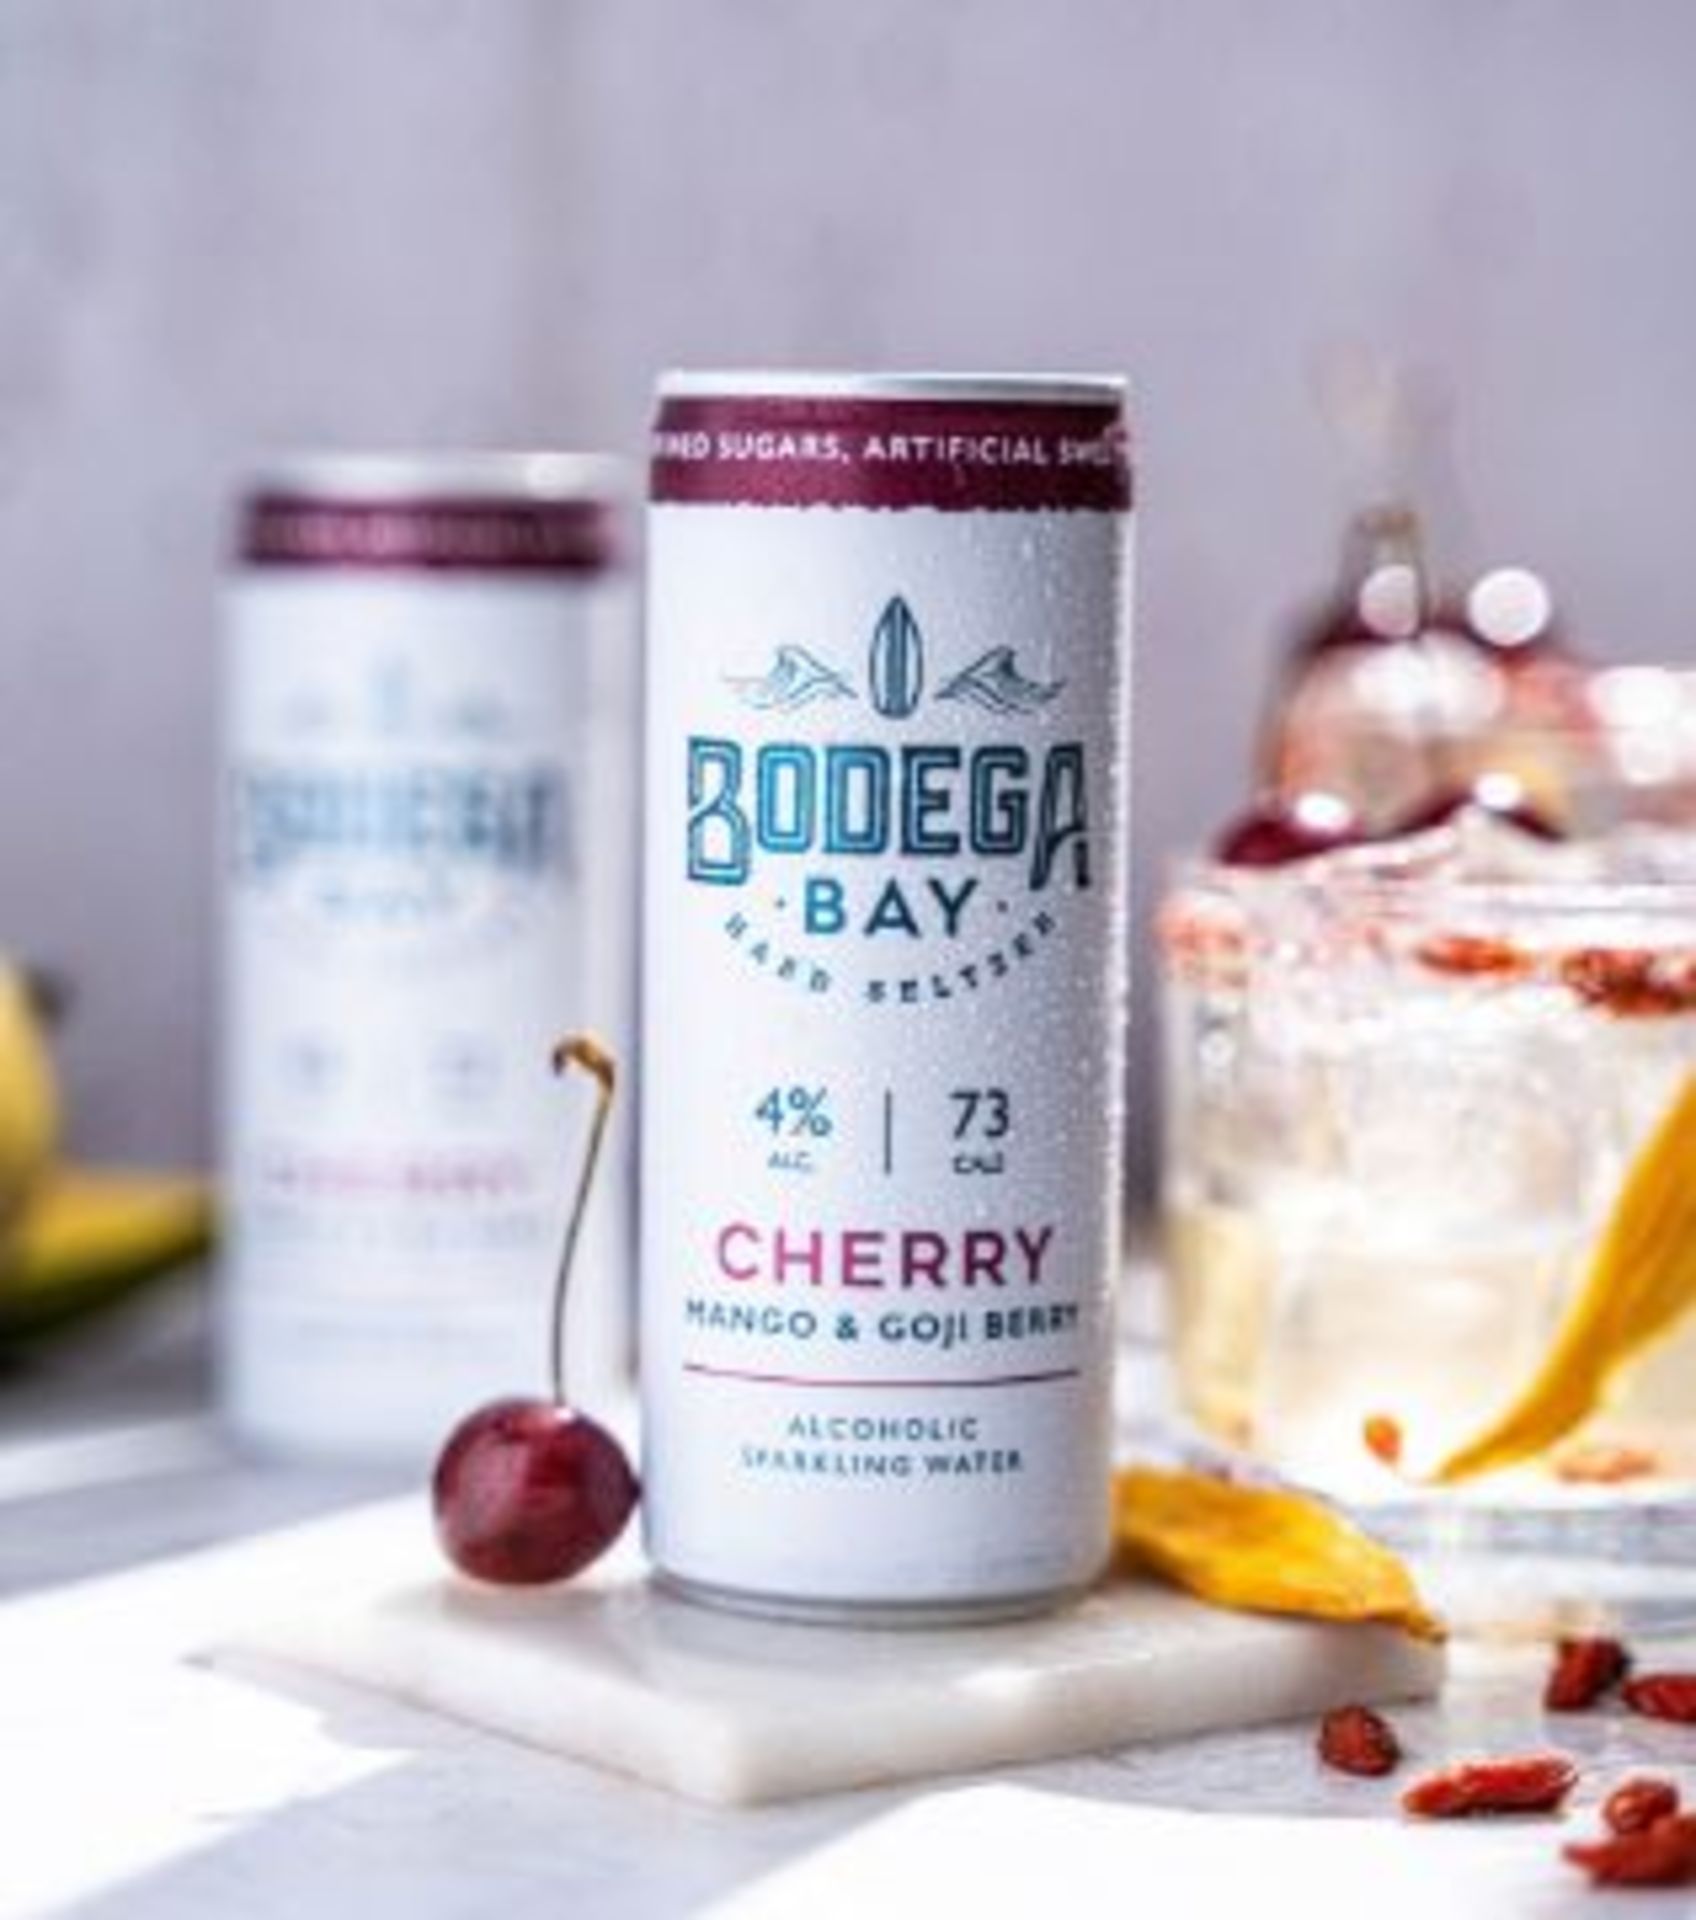 24 x Bodega Bay Hard Seltzer 250ml Alcoholic Sparkling Water Drinks - Cherry Mango & Goji Berry - 4% - Image 2 of 2